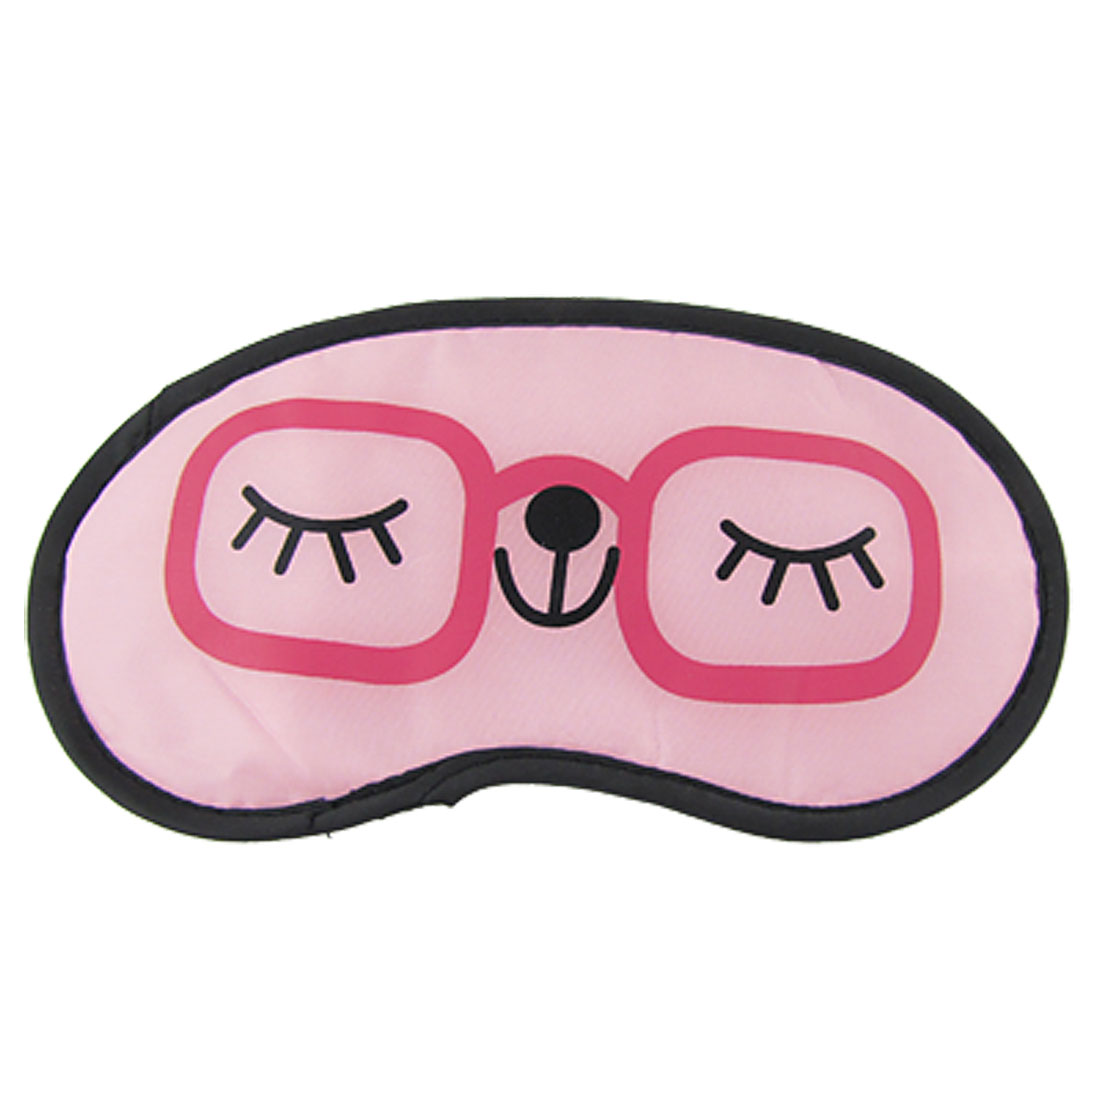 Cartoon Smile Face Print Travel Sleeping Eye Shade Mask Cover Pink